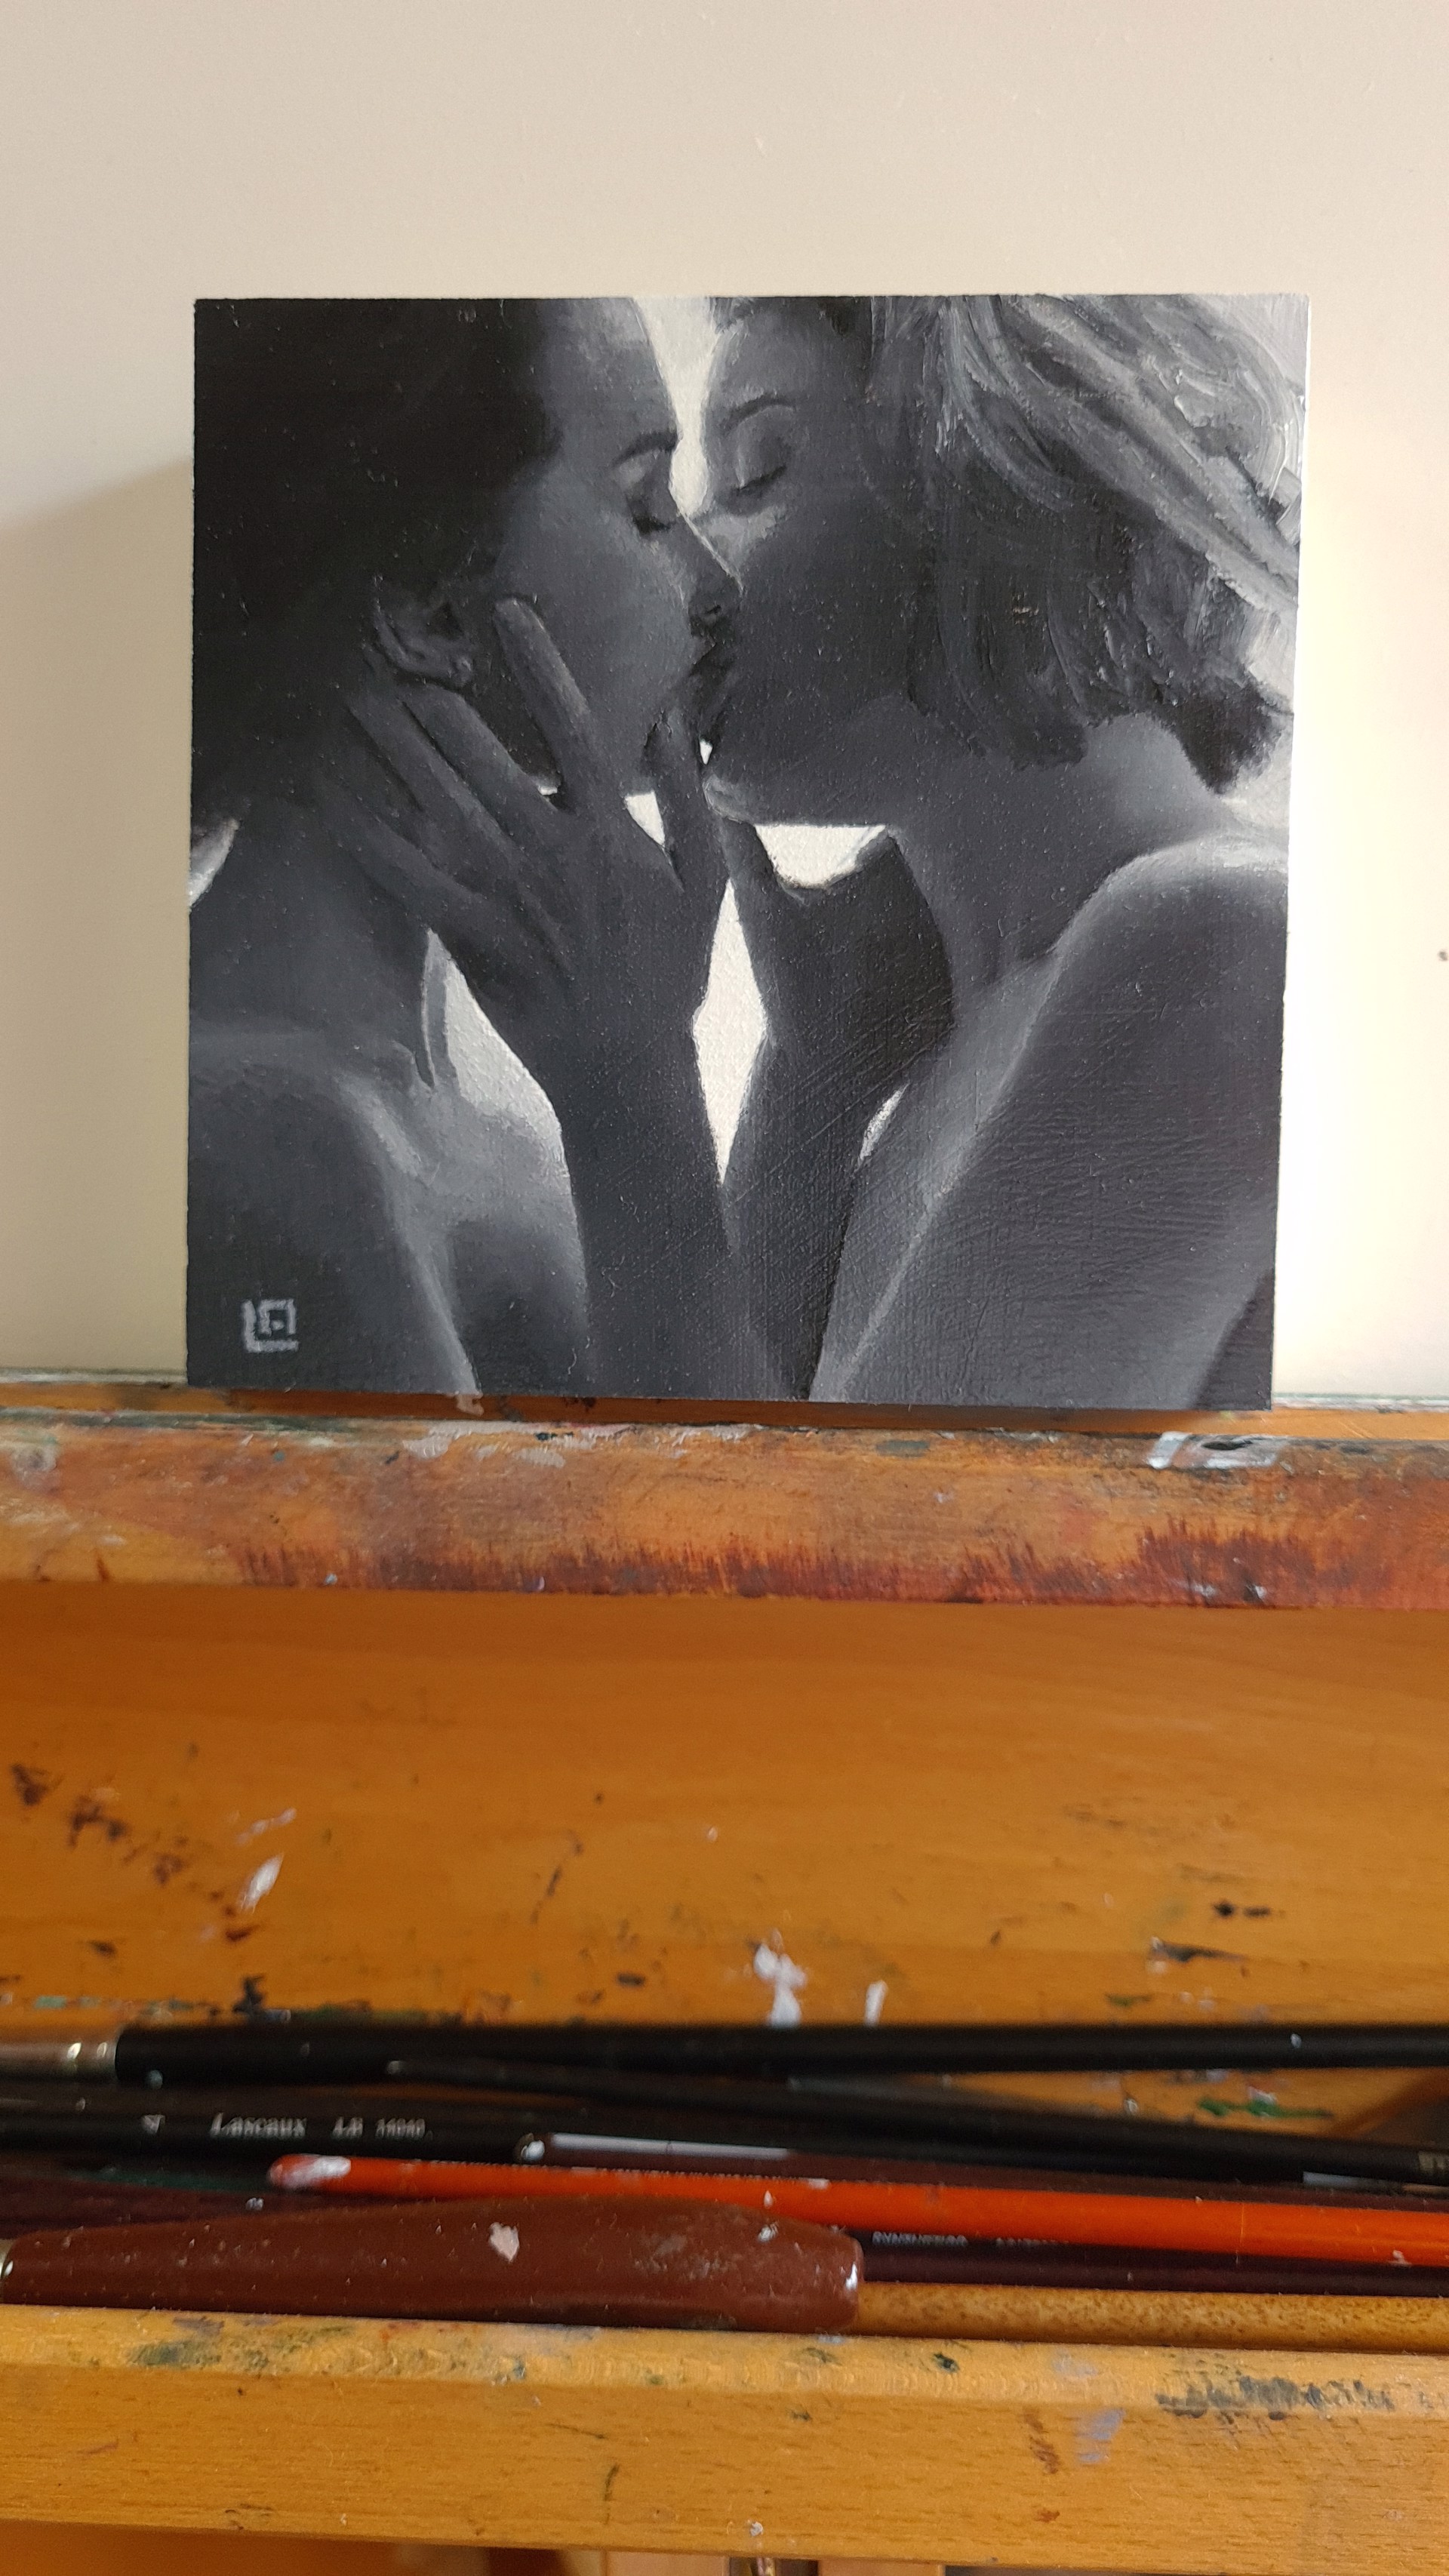 The Kiss #9 by Linda Delahaye